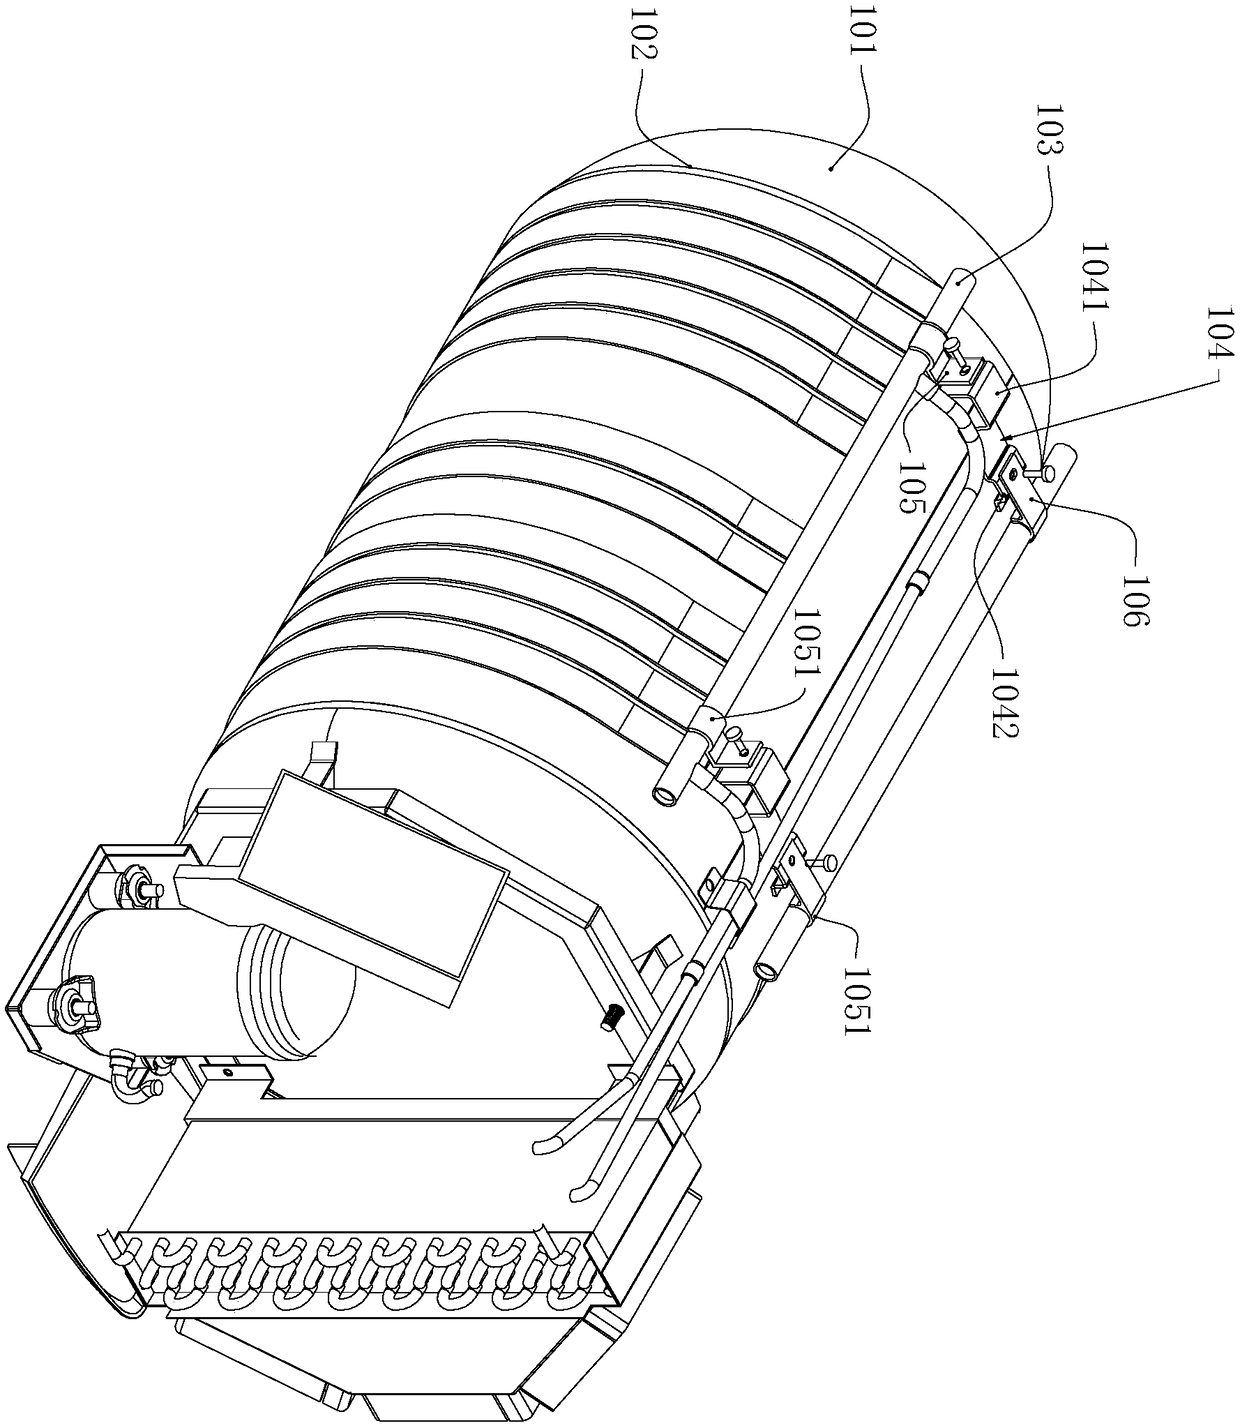 Transverse type wall-hung small intelligent heat pump water heater